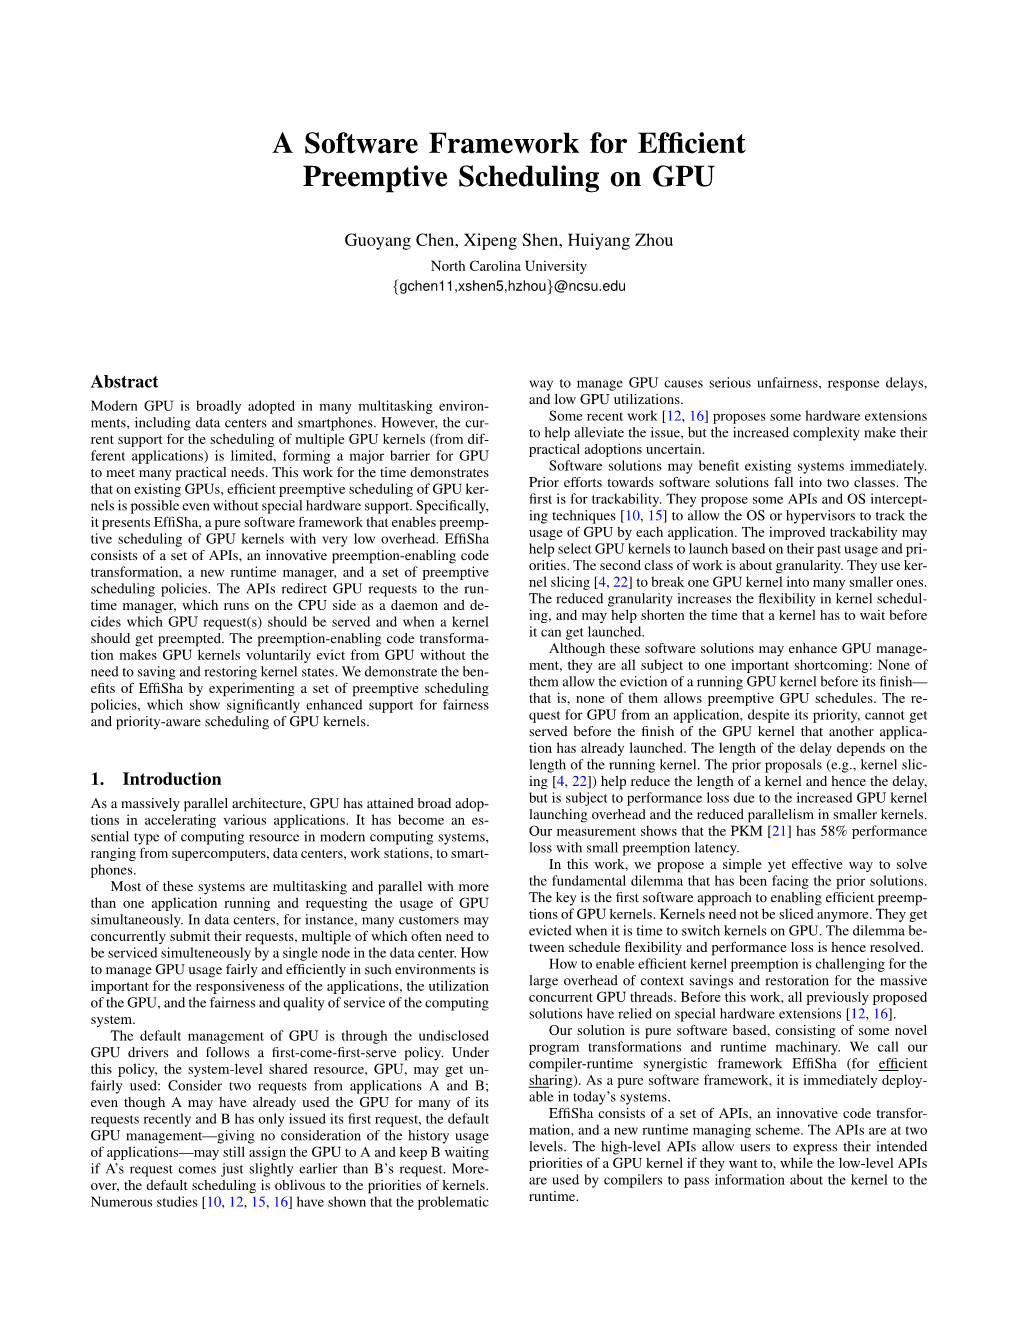 A Software Framework for Efficient Preemptive Scheduling On